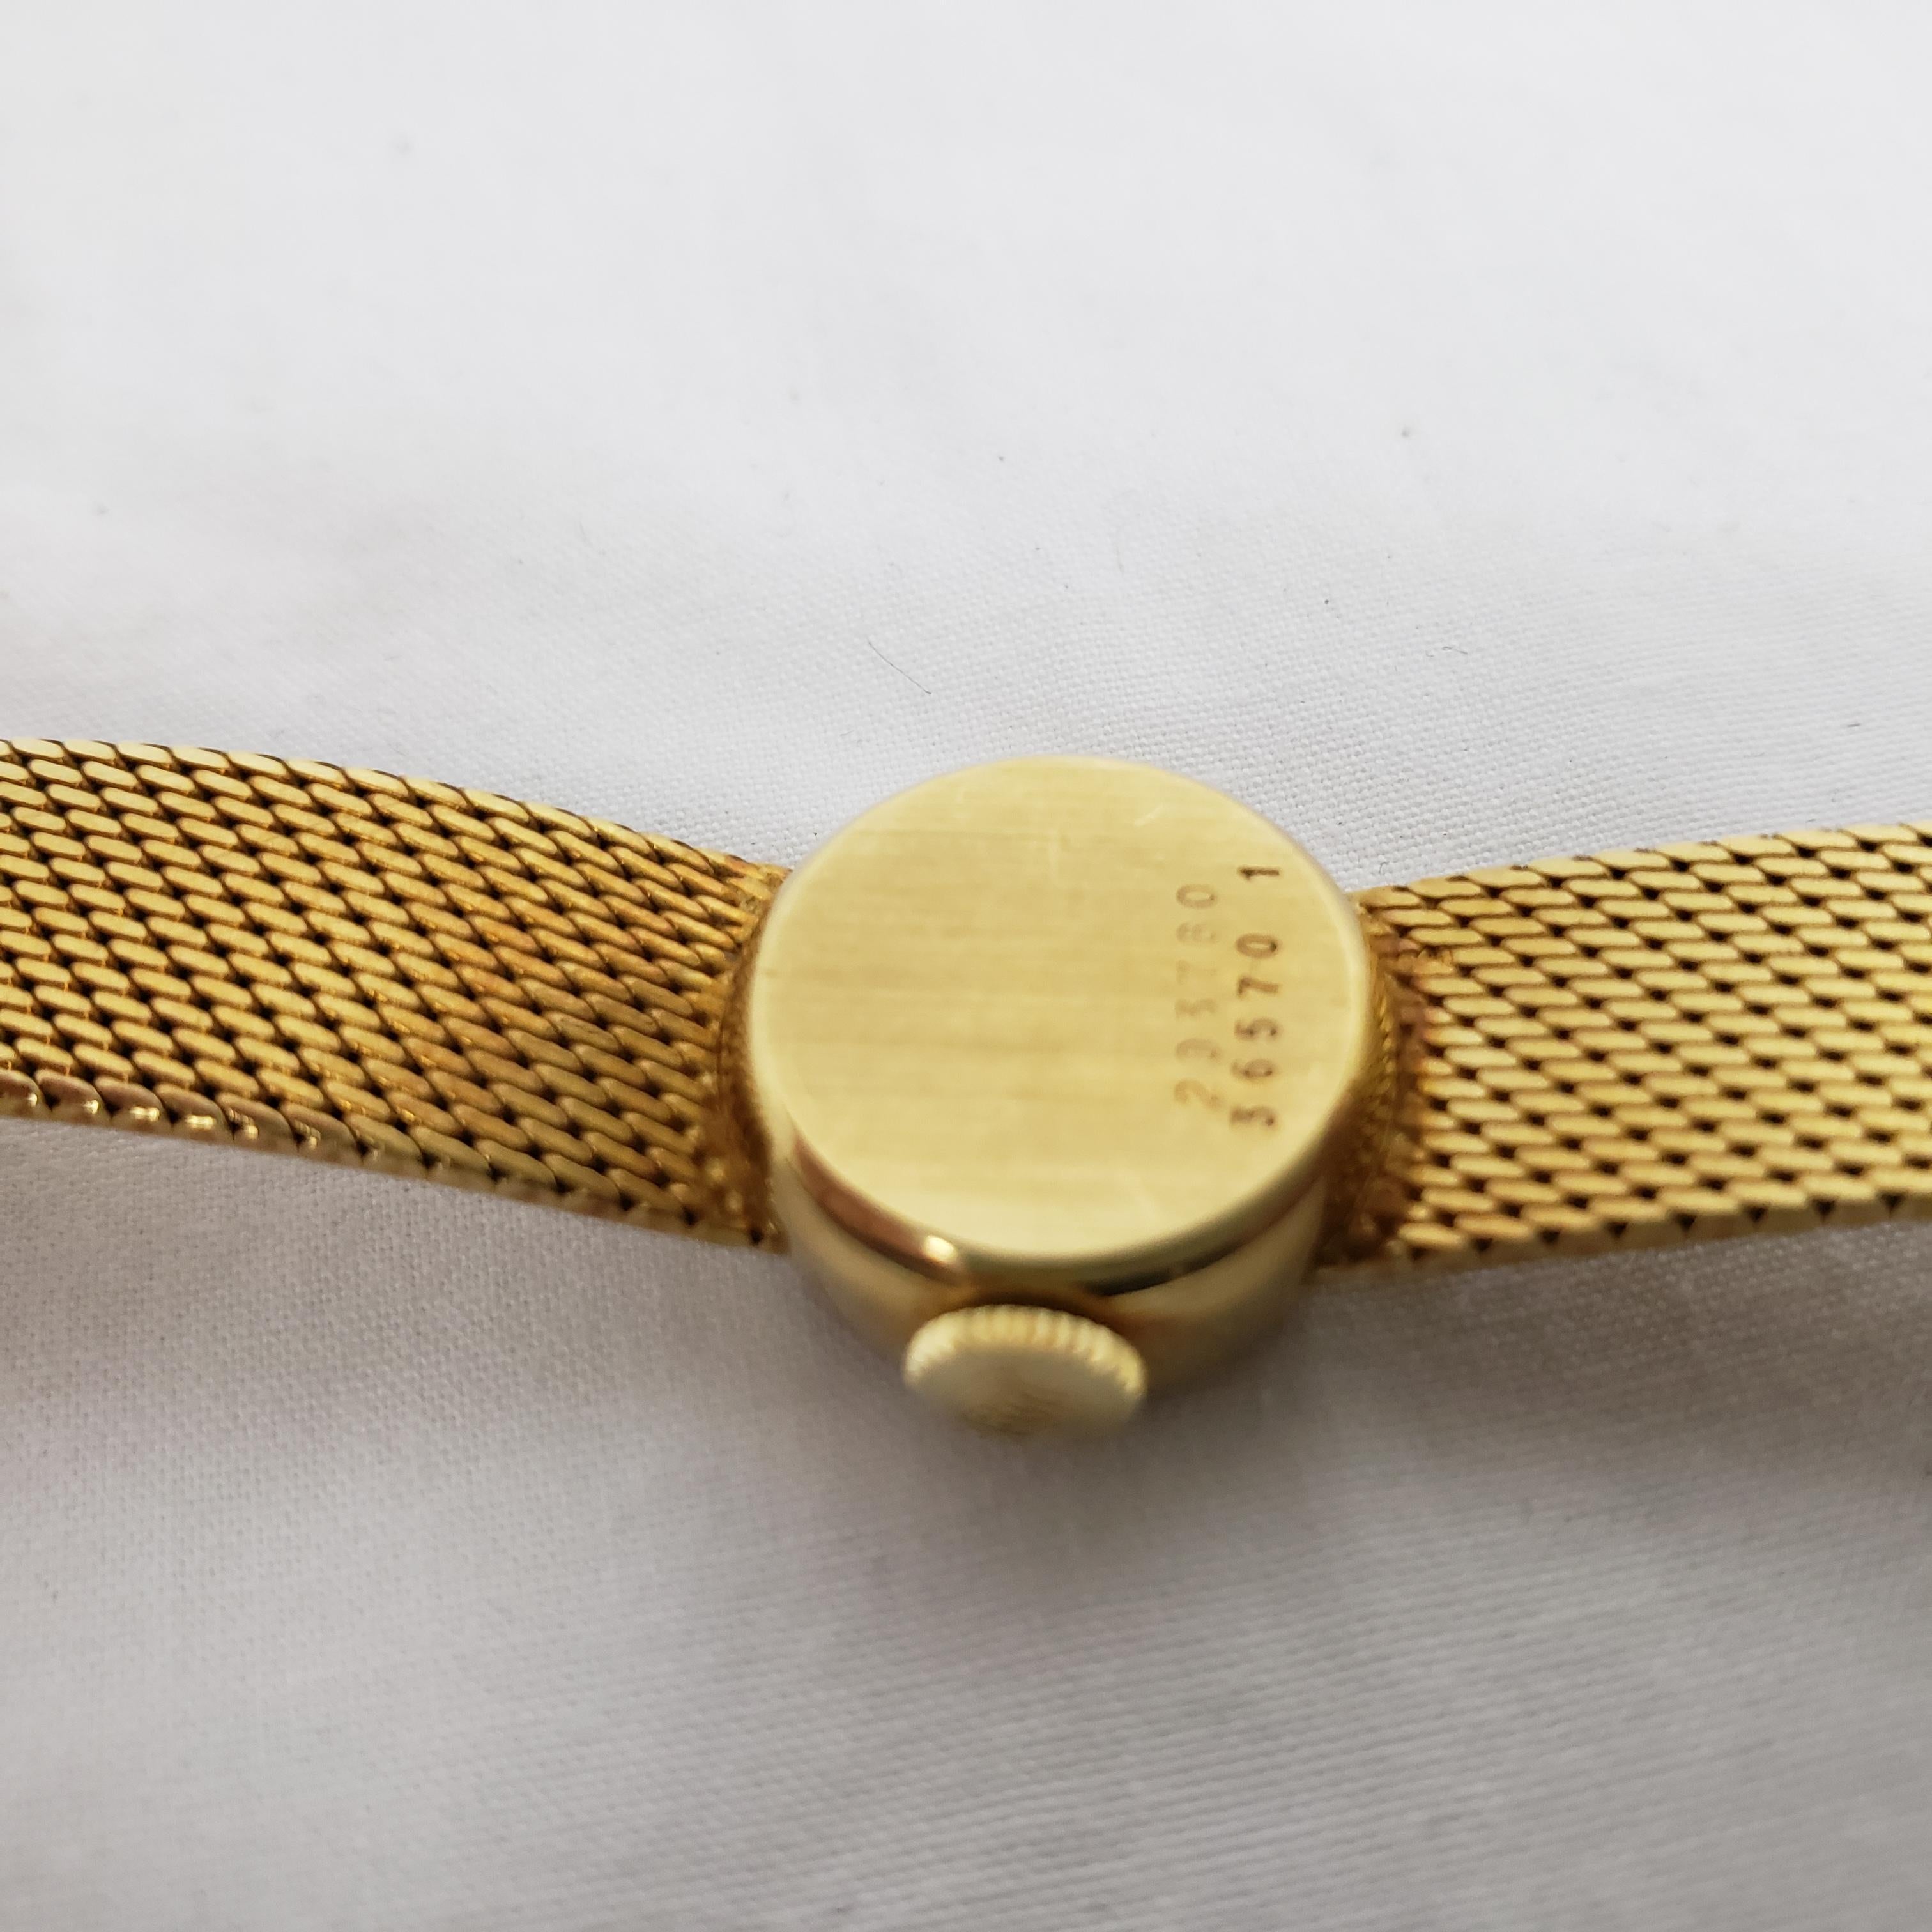 Baume Mercier 18 Karat Yellow Gold Ladies Wristwatch & Bracelet & Original Box For Sale 5